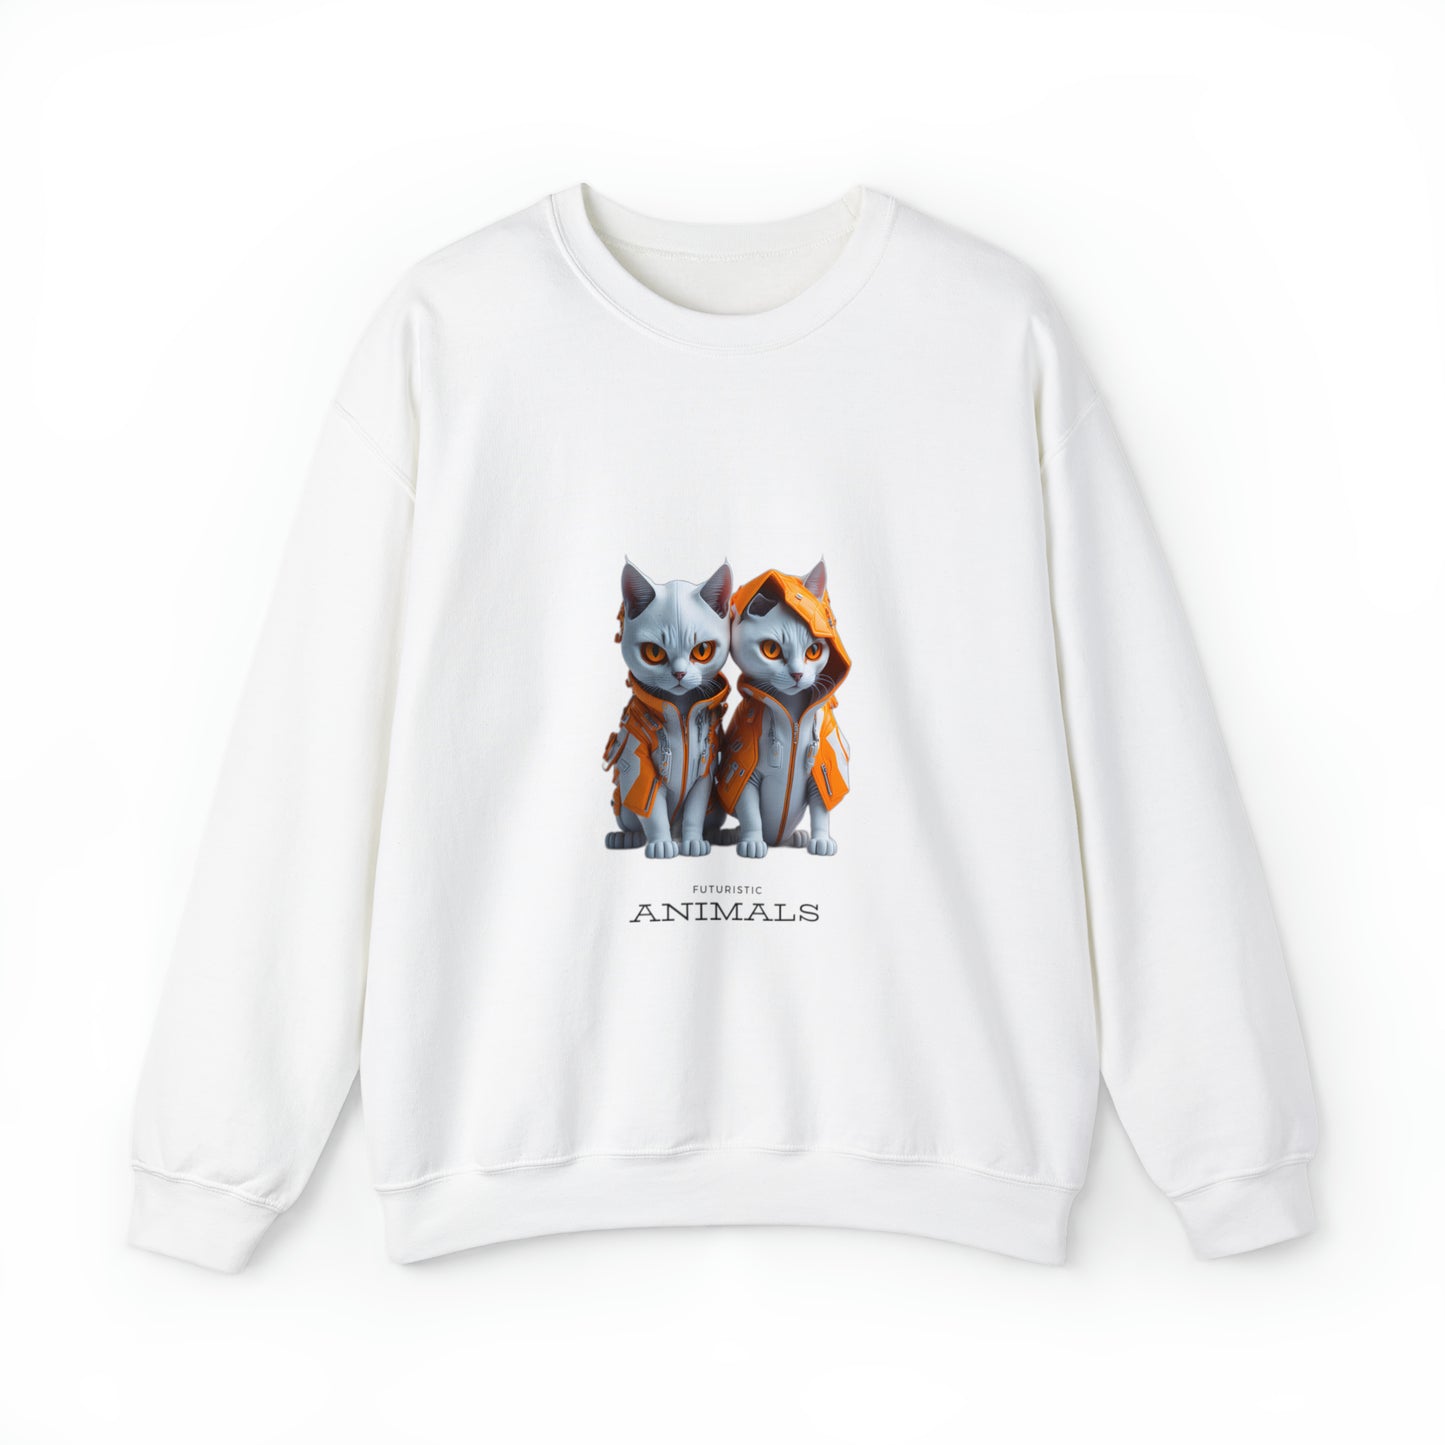 Futuristic Animals Sweatshirt Cats